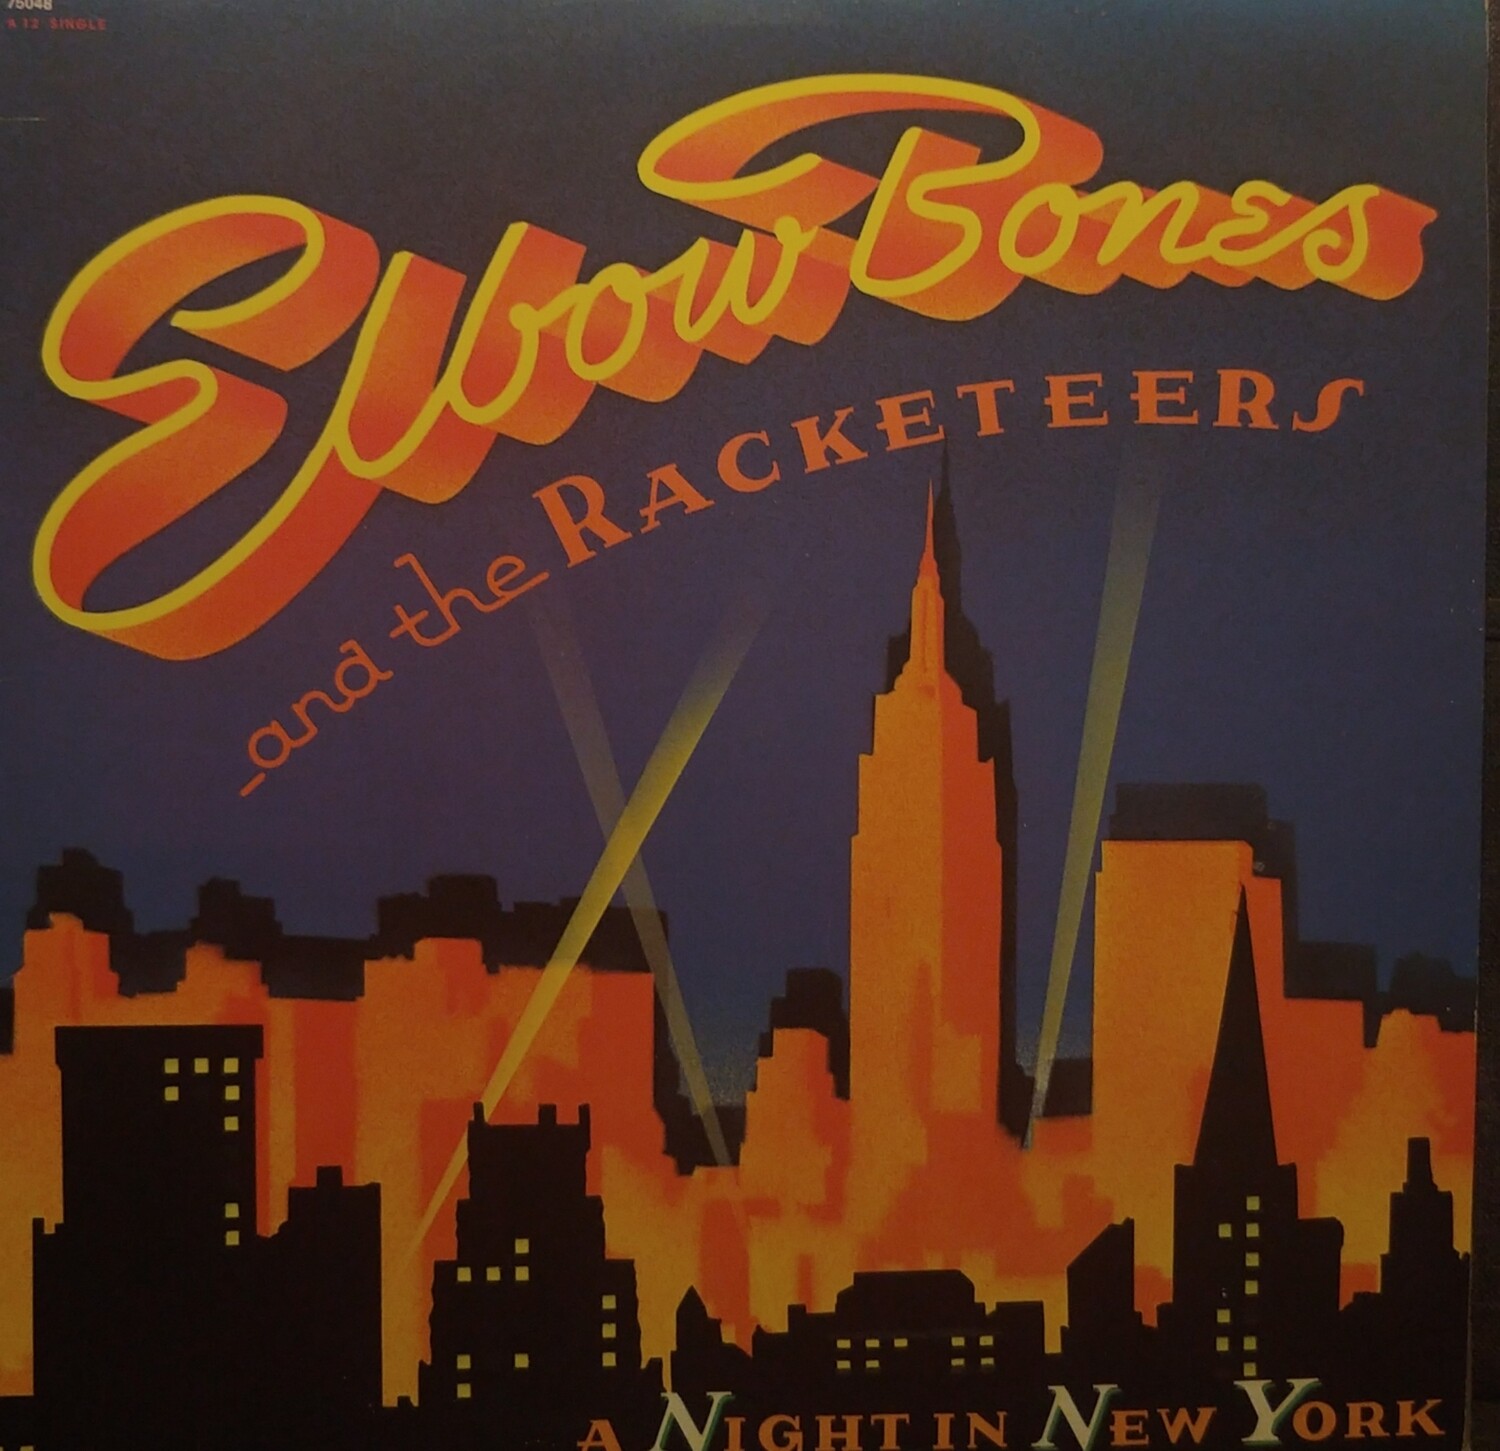 Elbow Bones & The Racketeers - A Night in New York